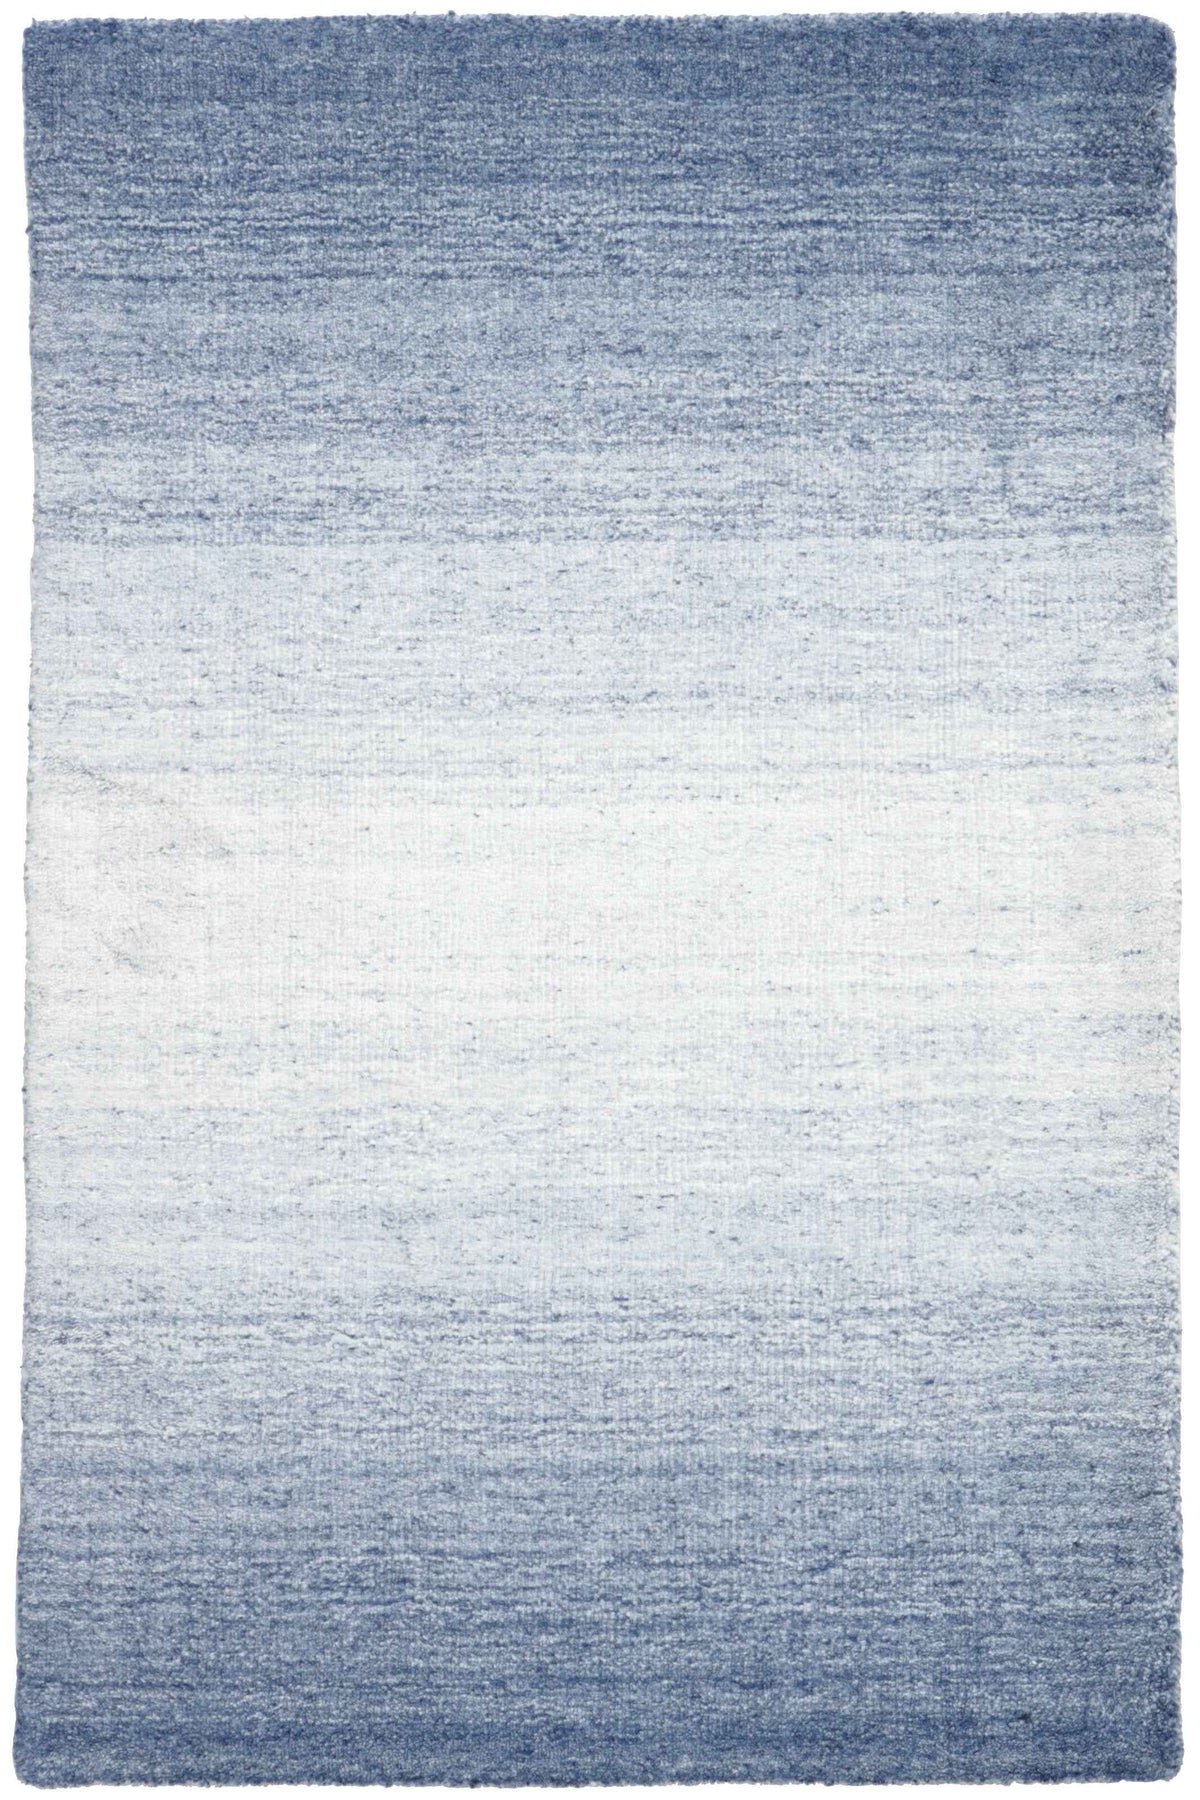 200x140 cm  Indian Wool/Viscose Blue Rug-840394